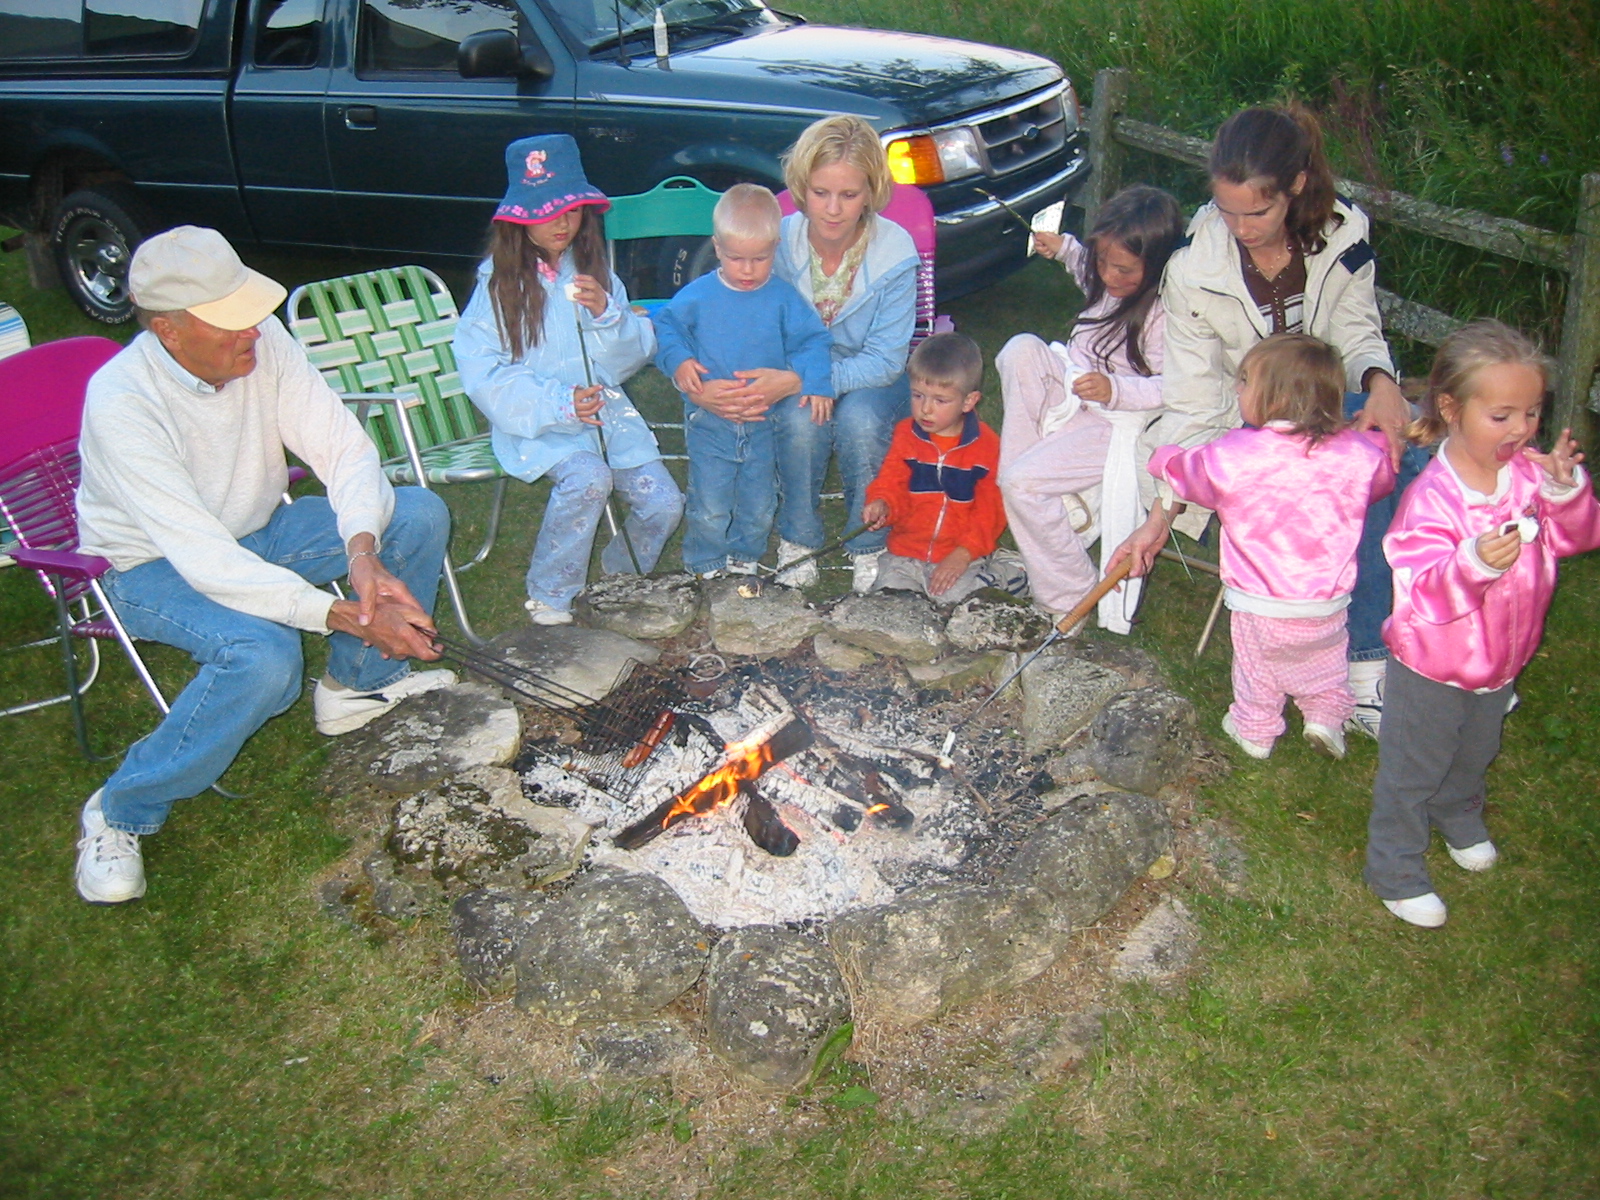 Campfire at Grandpa's